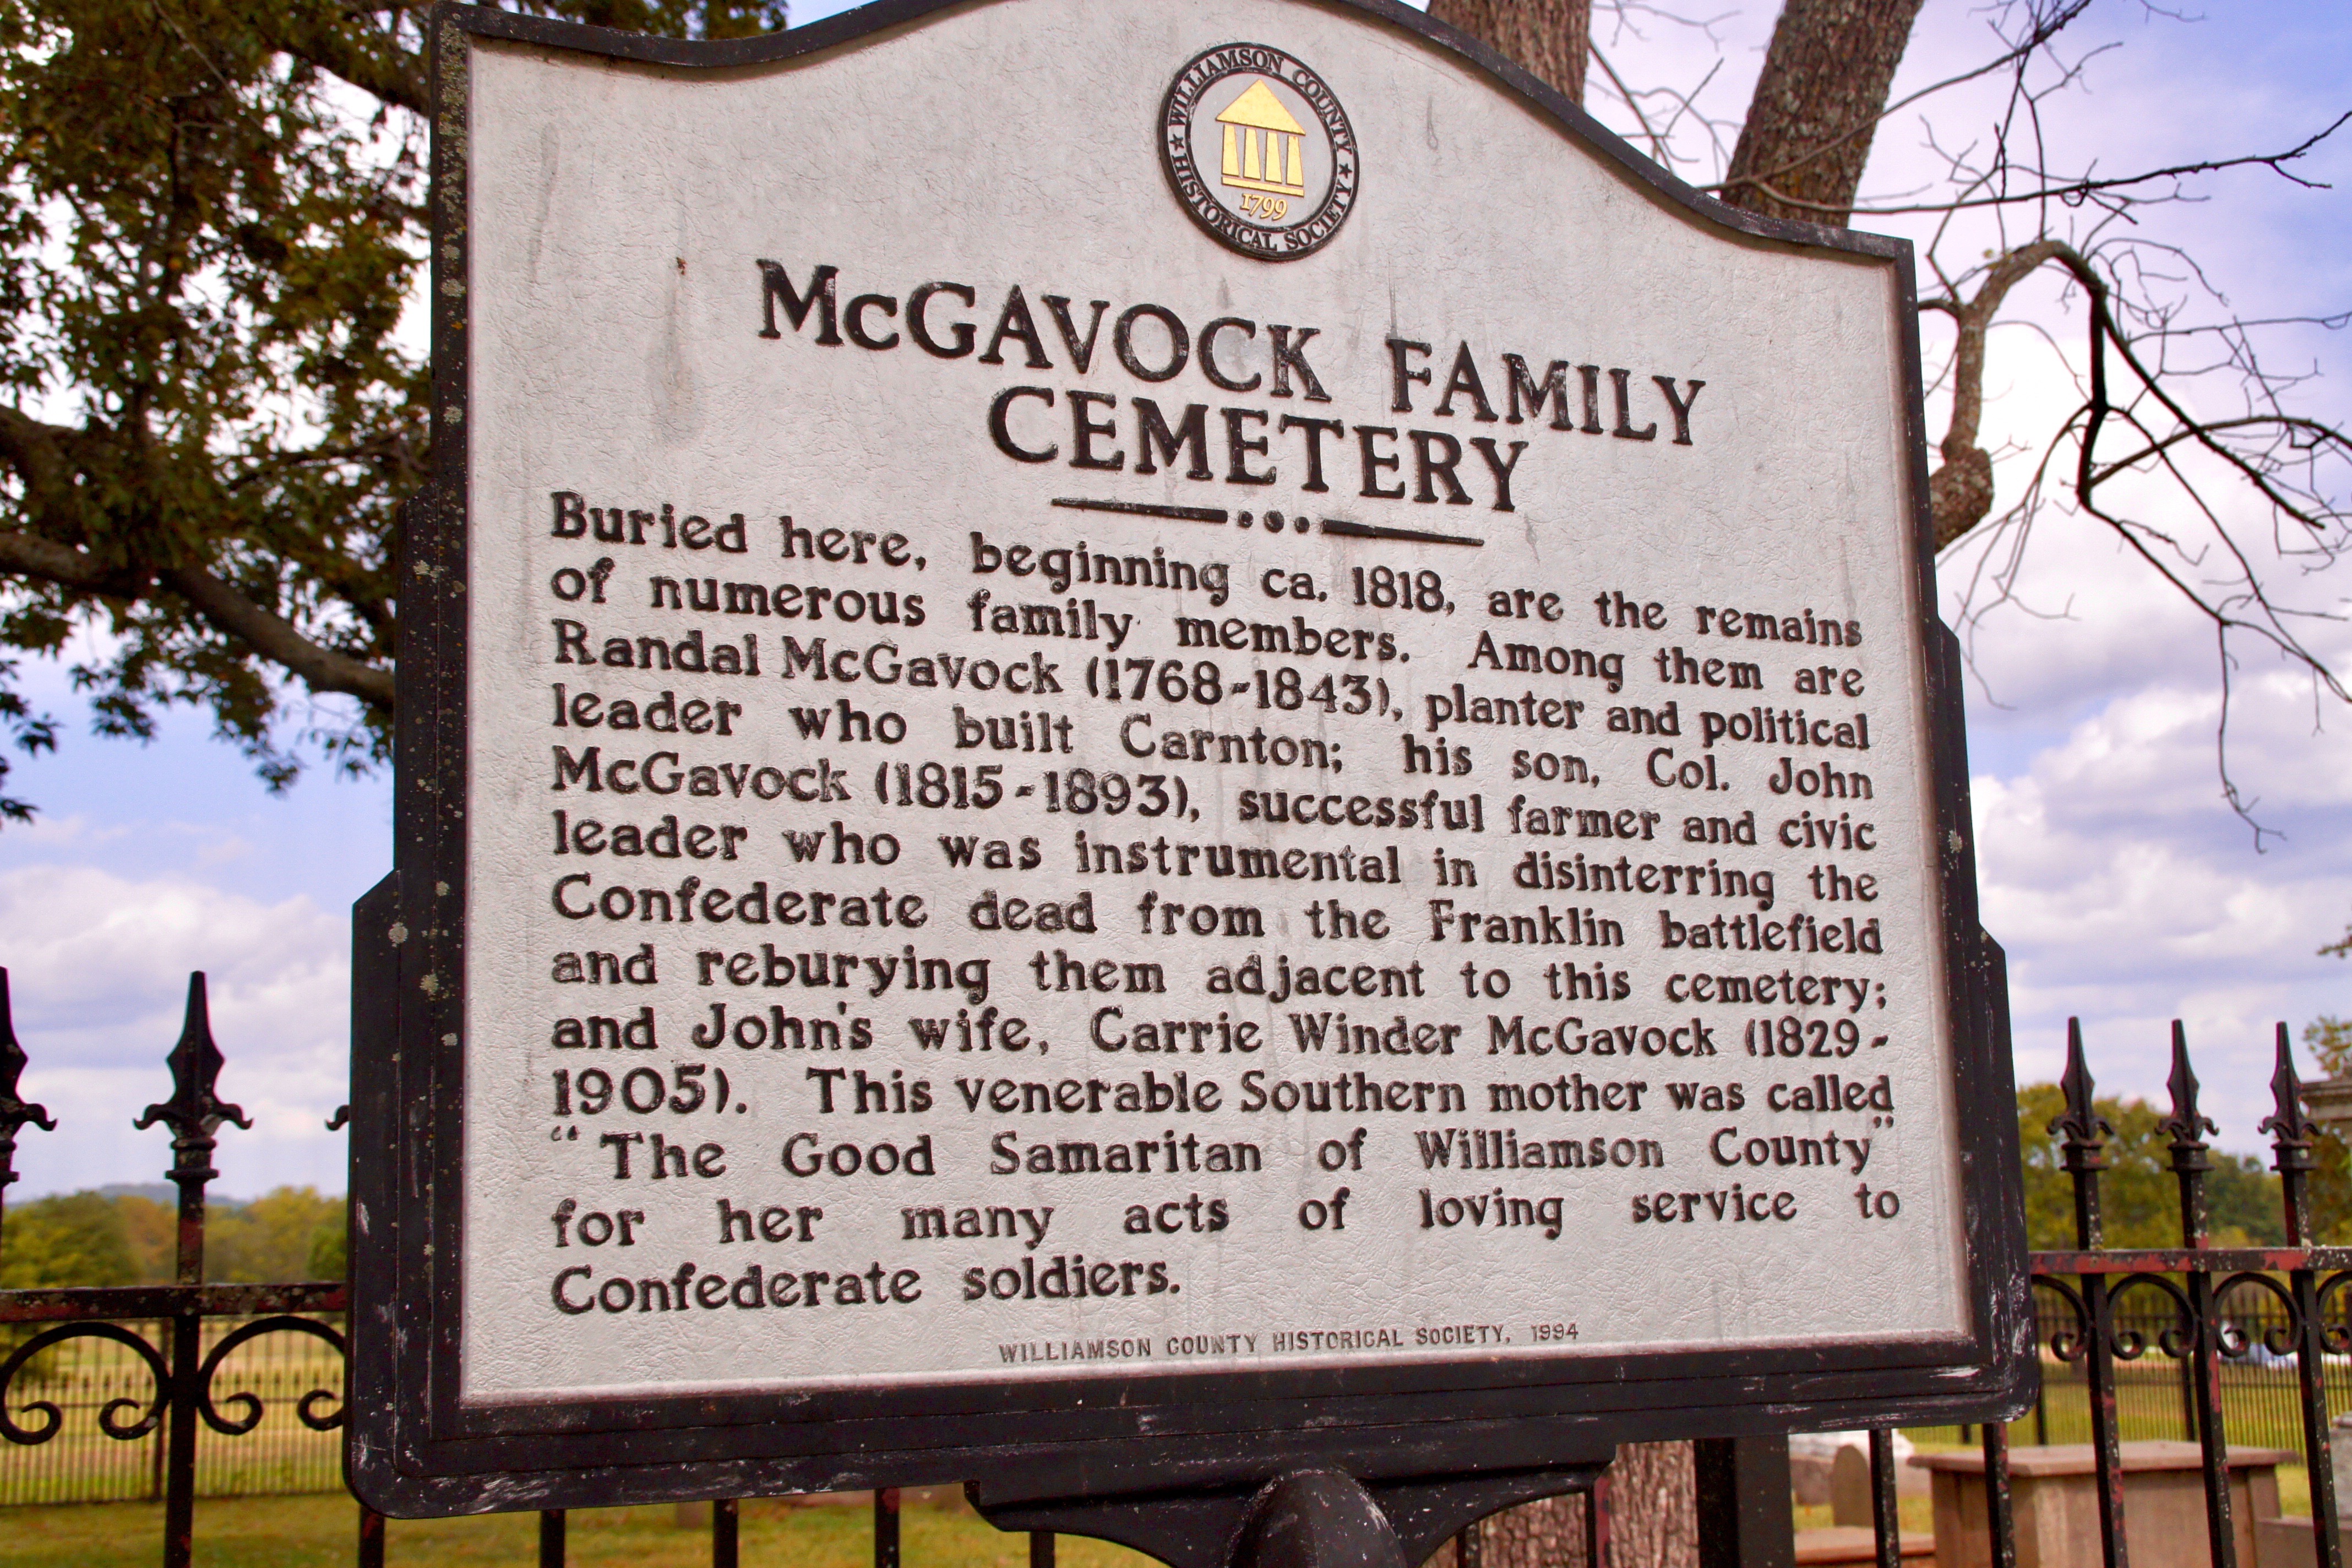 sign describes Carrie McGavock as "The Good Samaritan of Williamson County."